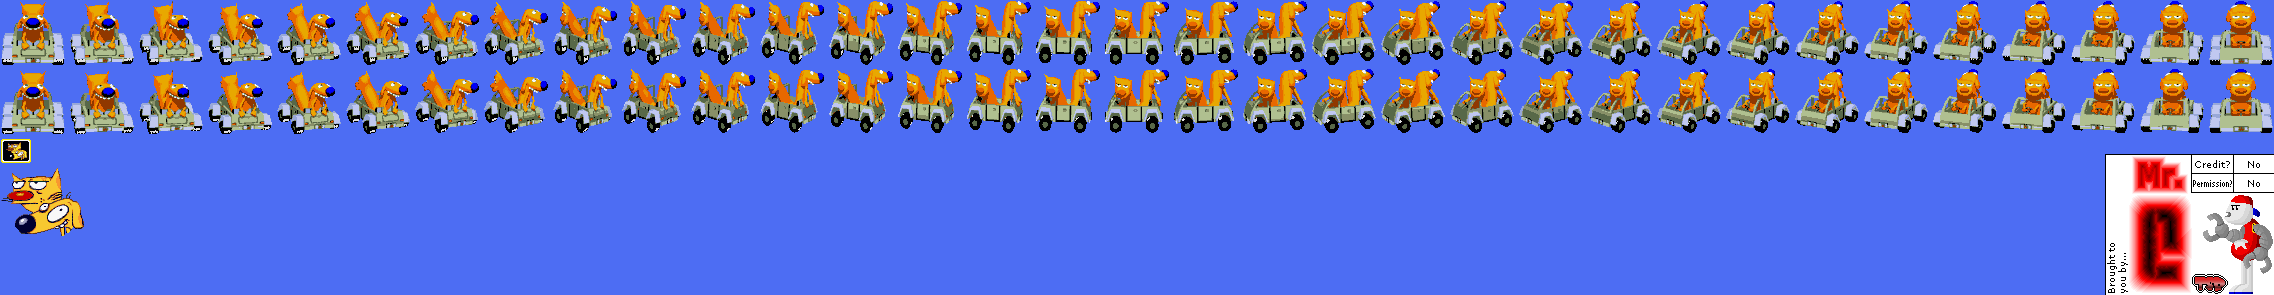 Nicktoons Racing - CatDog